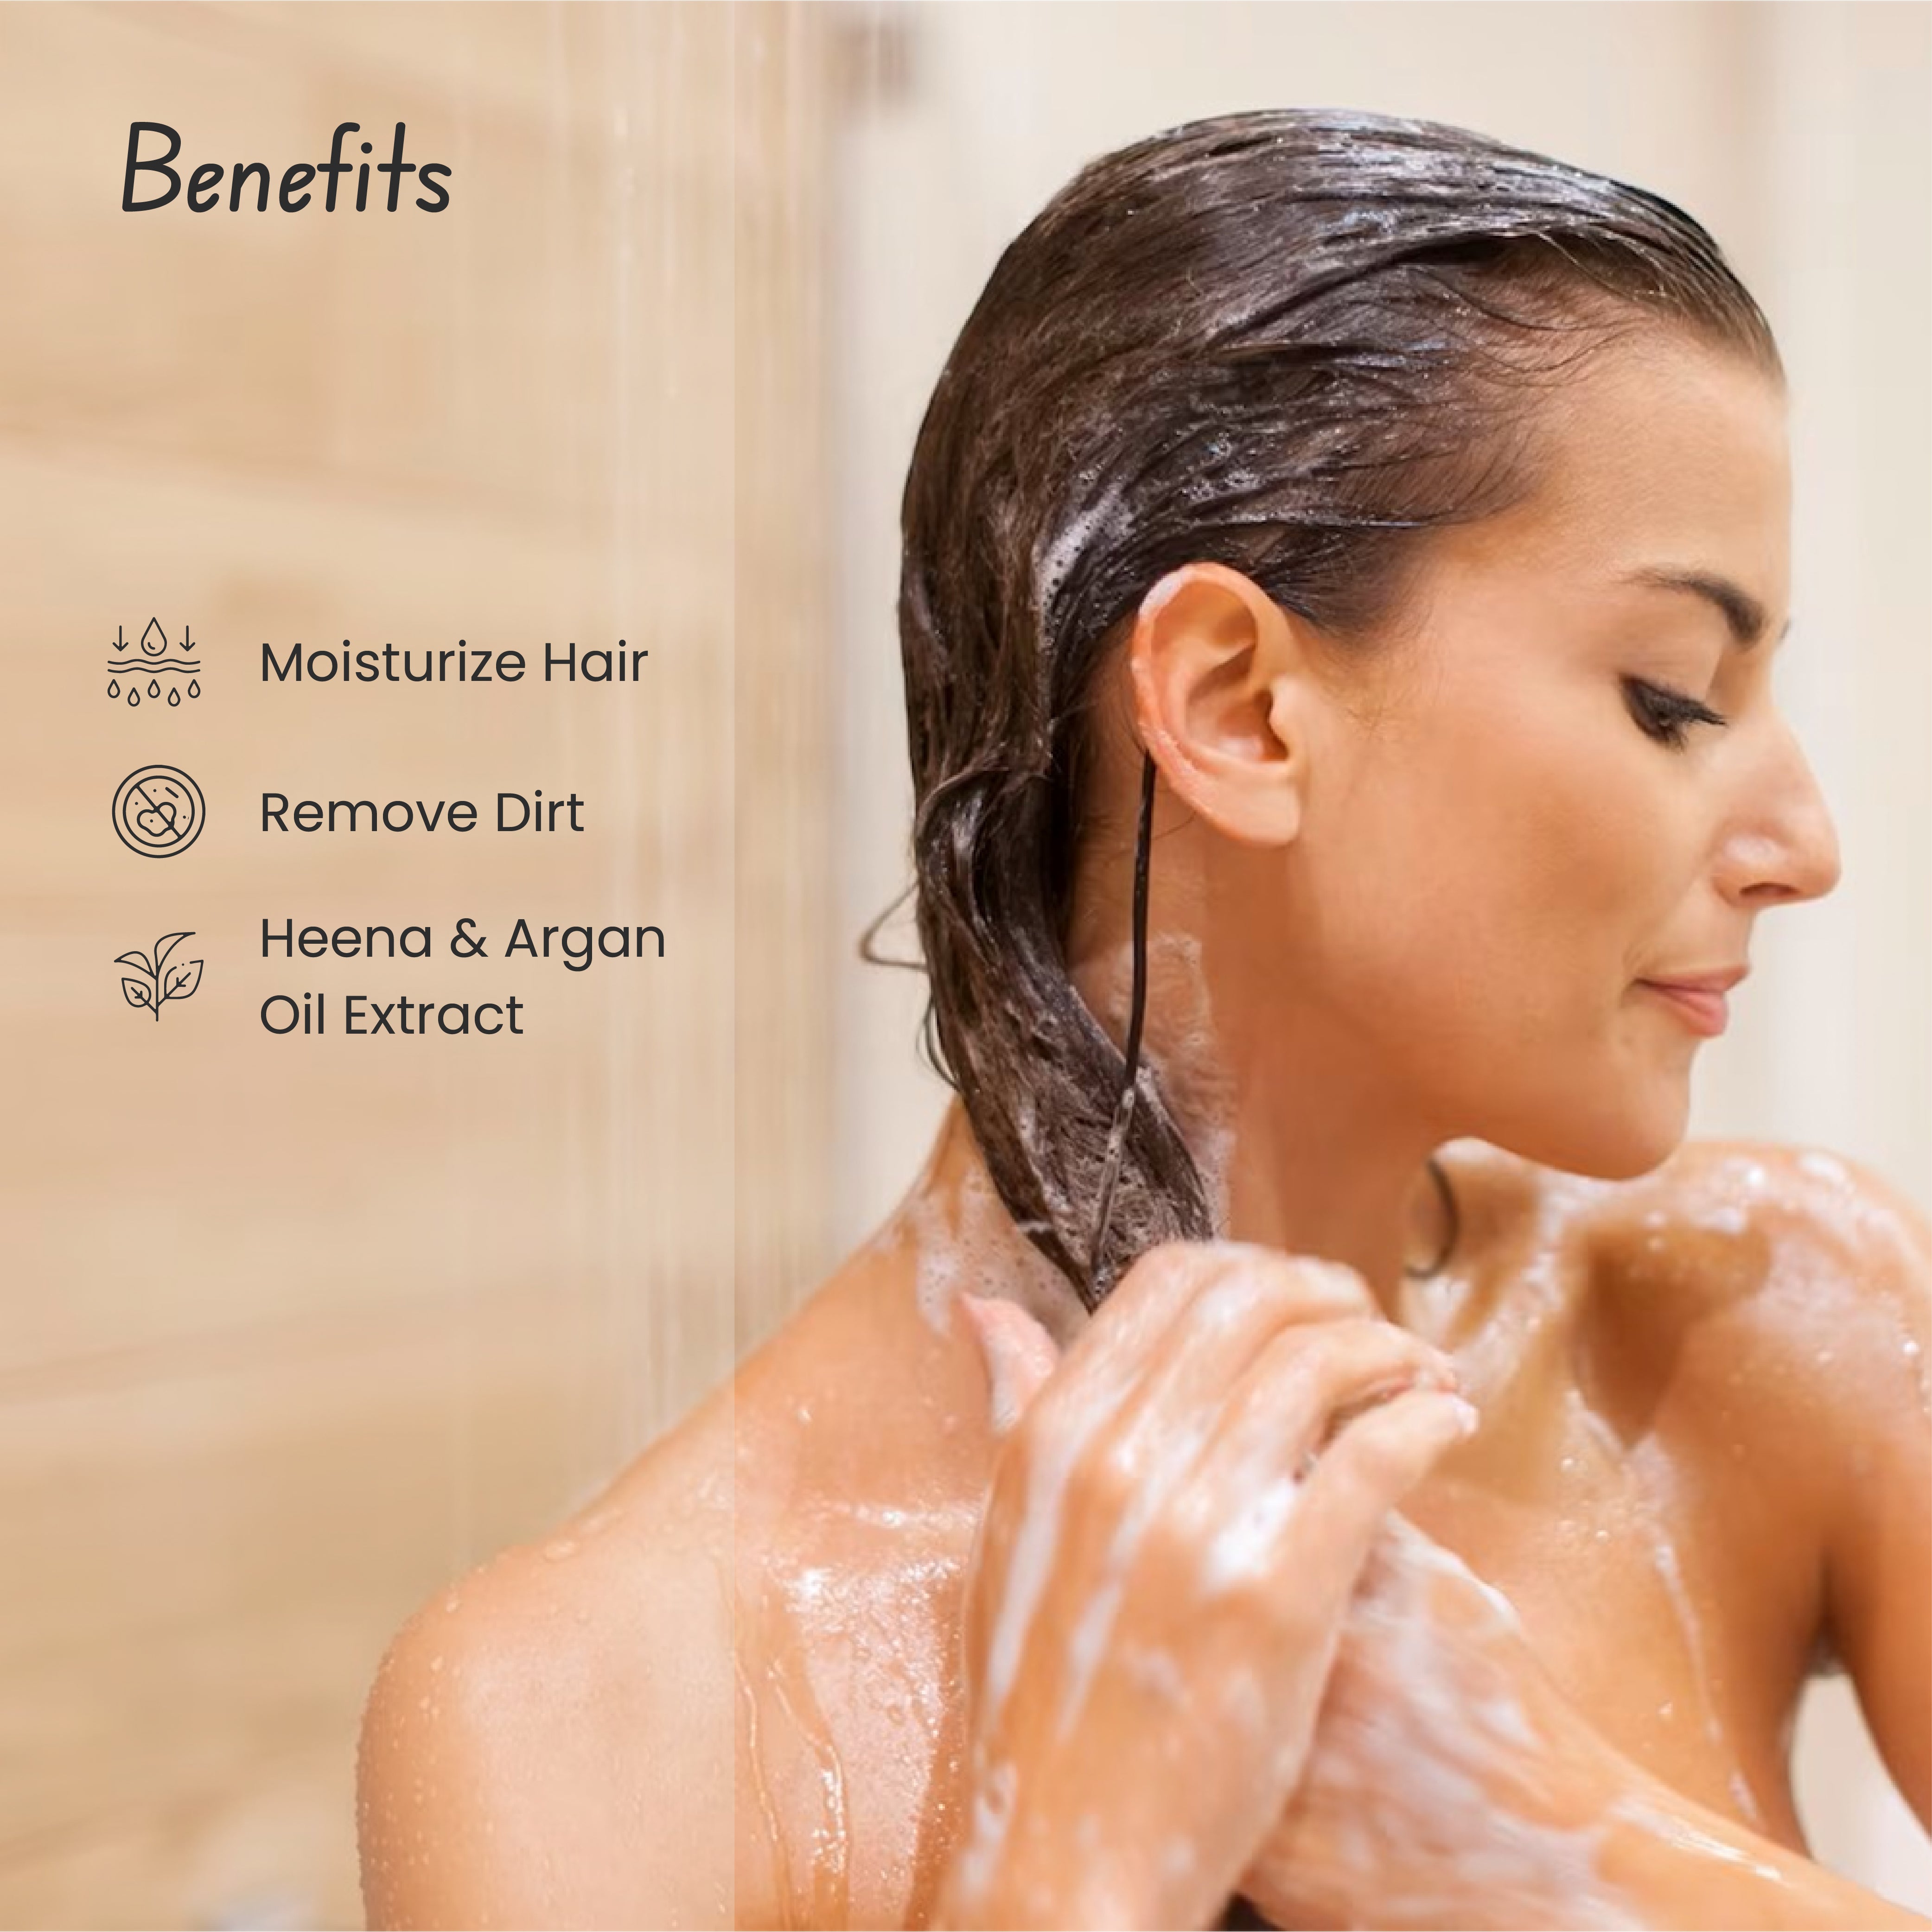 Henna & Argan Oil Smoothening & Strengthening Shampoo